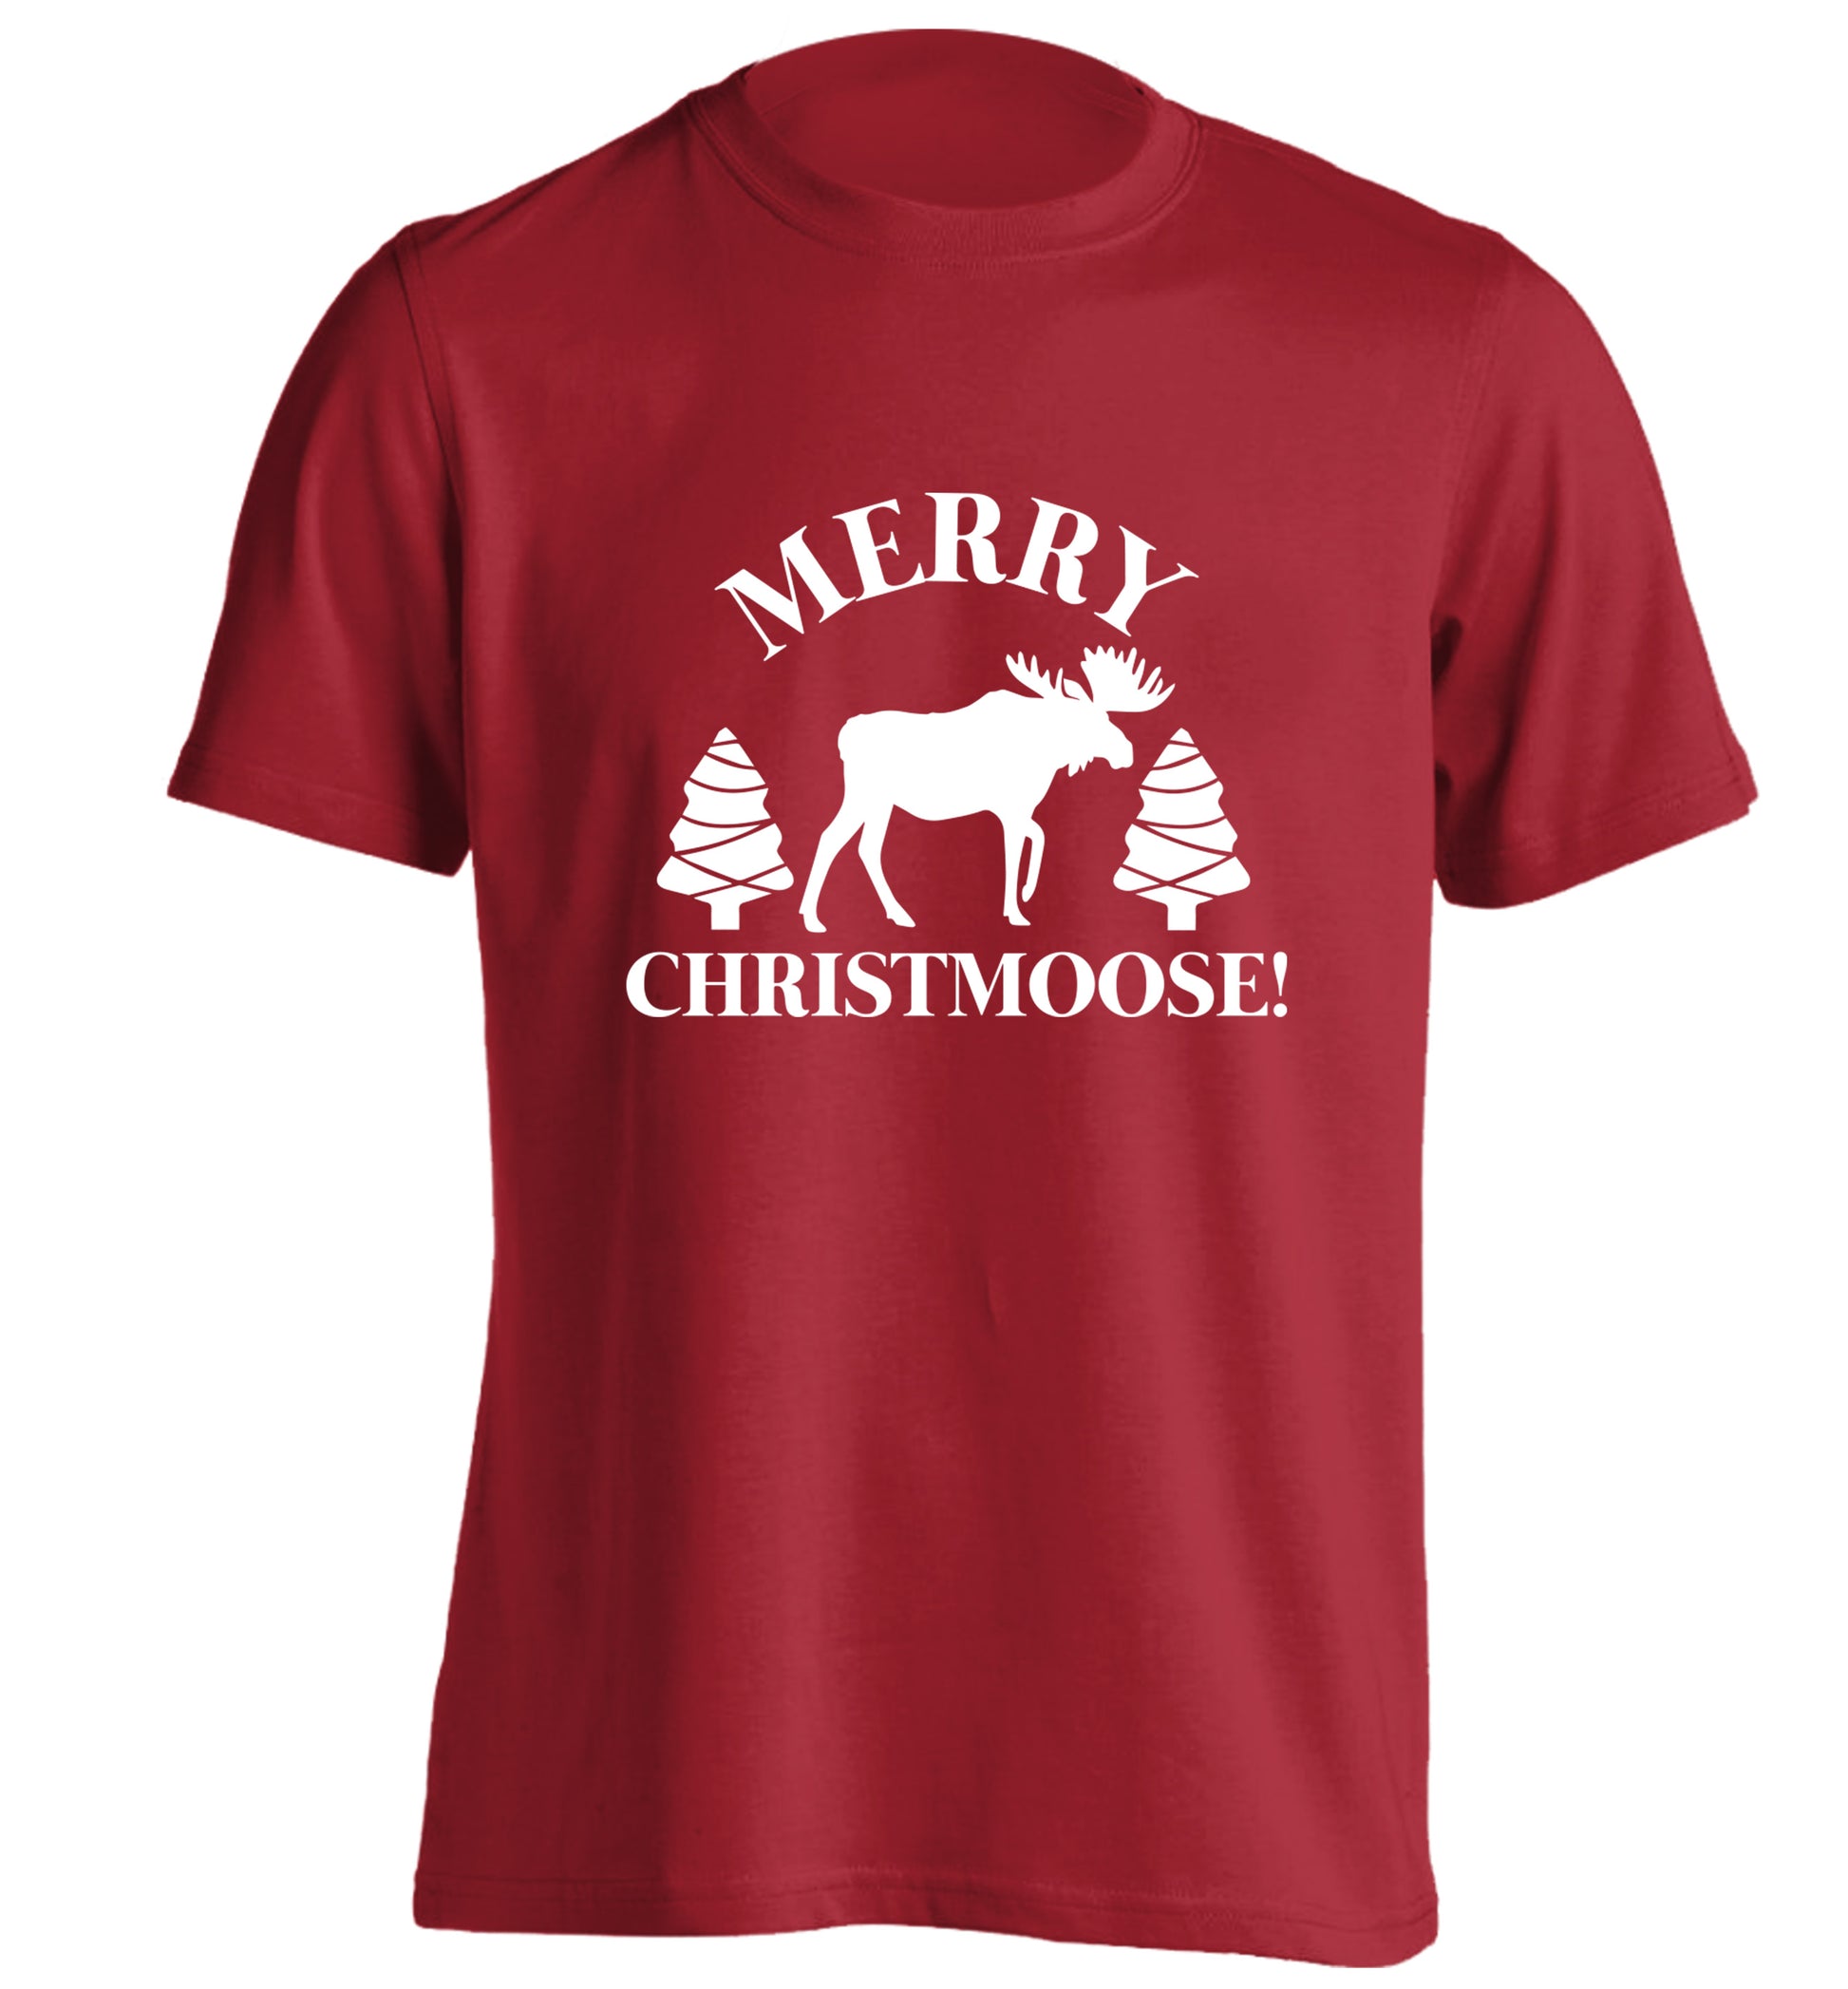 Merry Christmoose adults unisex red Tshirt 2XL